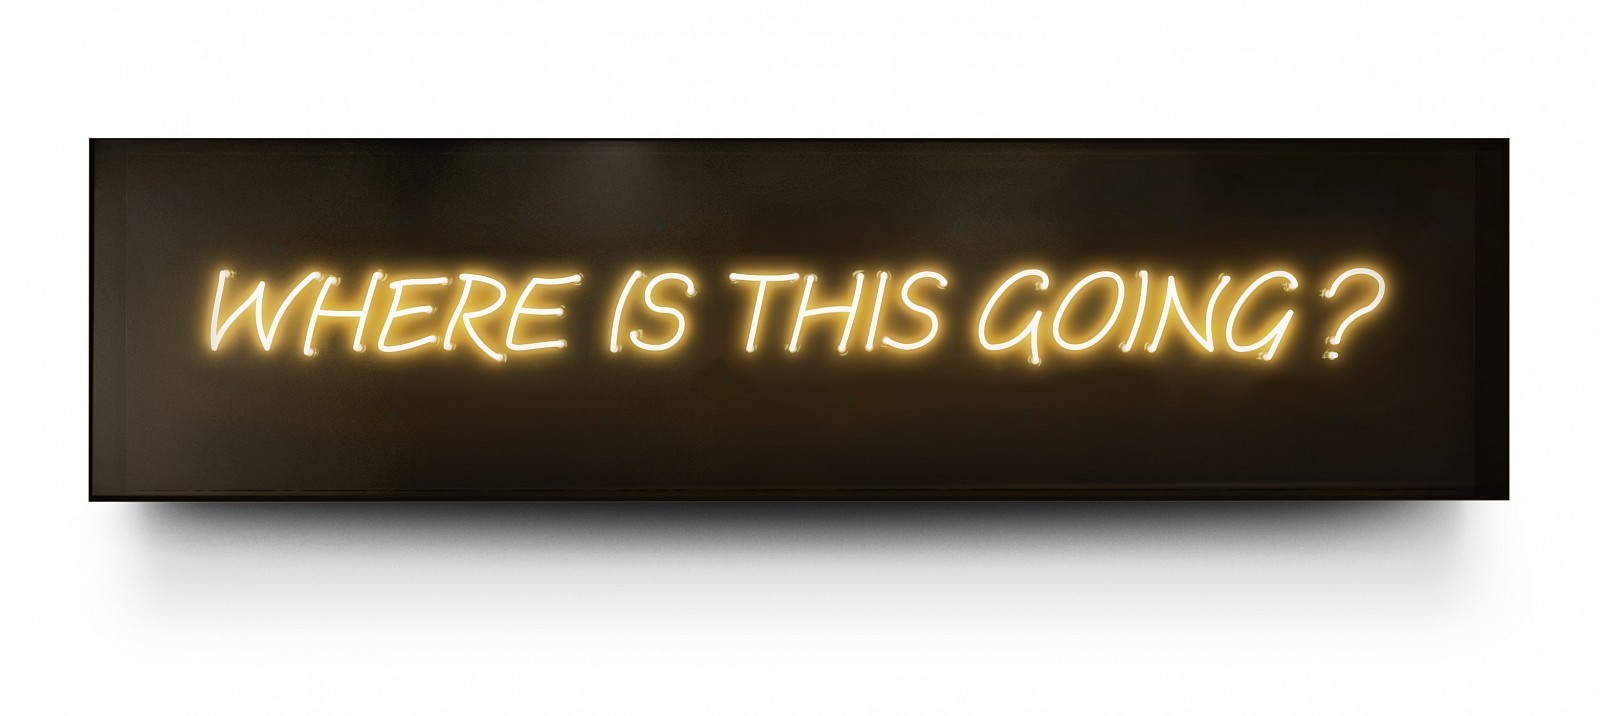 David Drebin, Where Is This Going?, 2014
Neon Light Installation, 15.5 x 60.5 x 7.5 inches